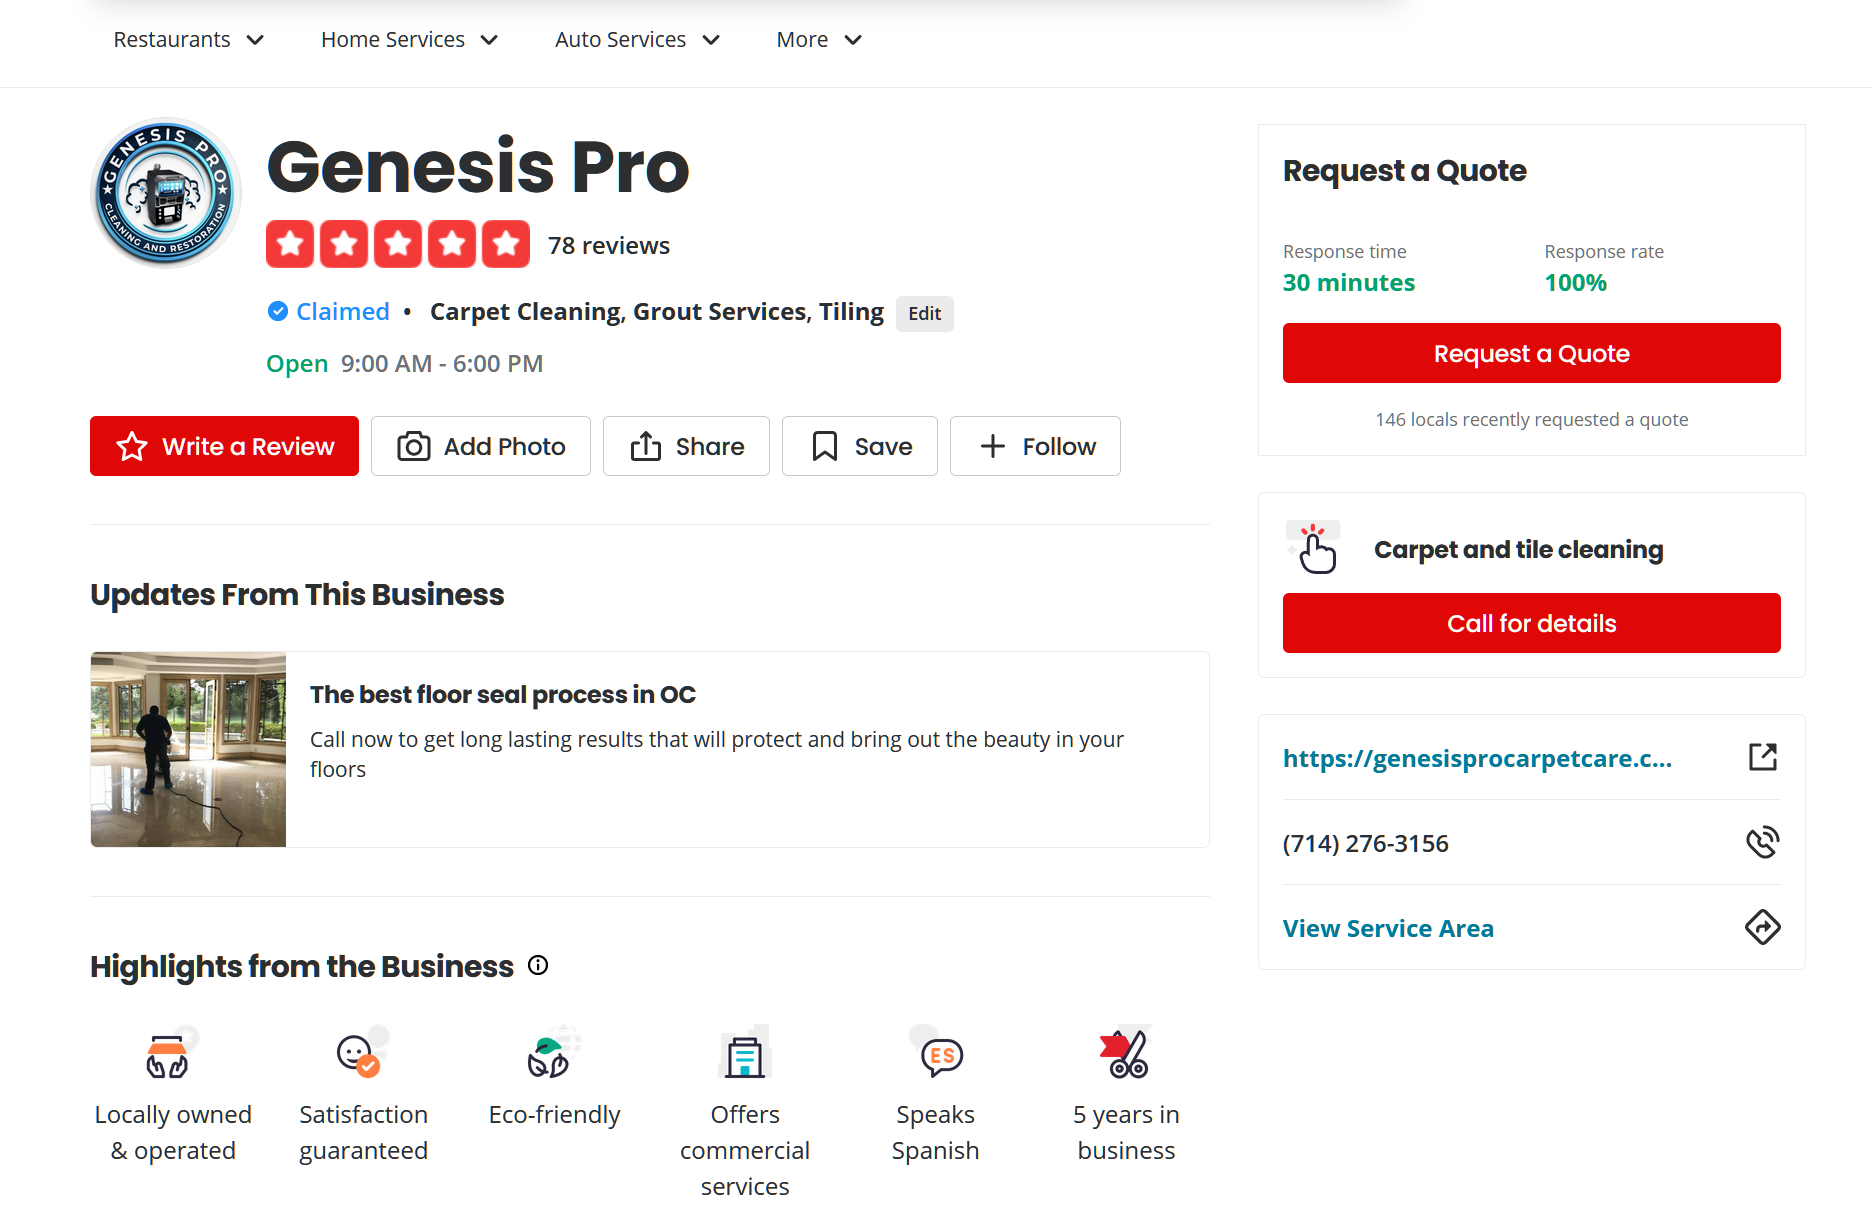 Genesis Pro Carpet Care has 5 stars on Yelp!